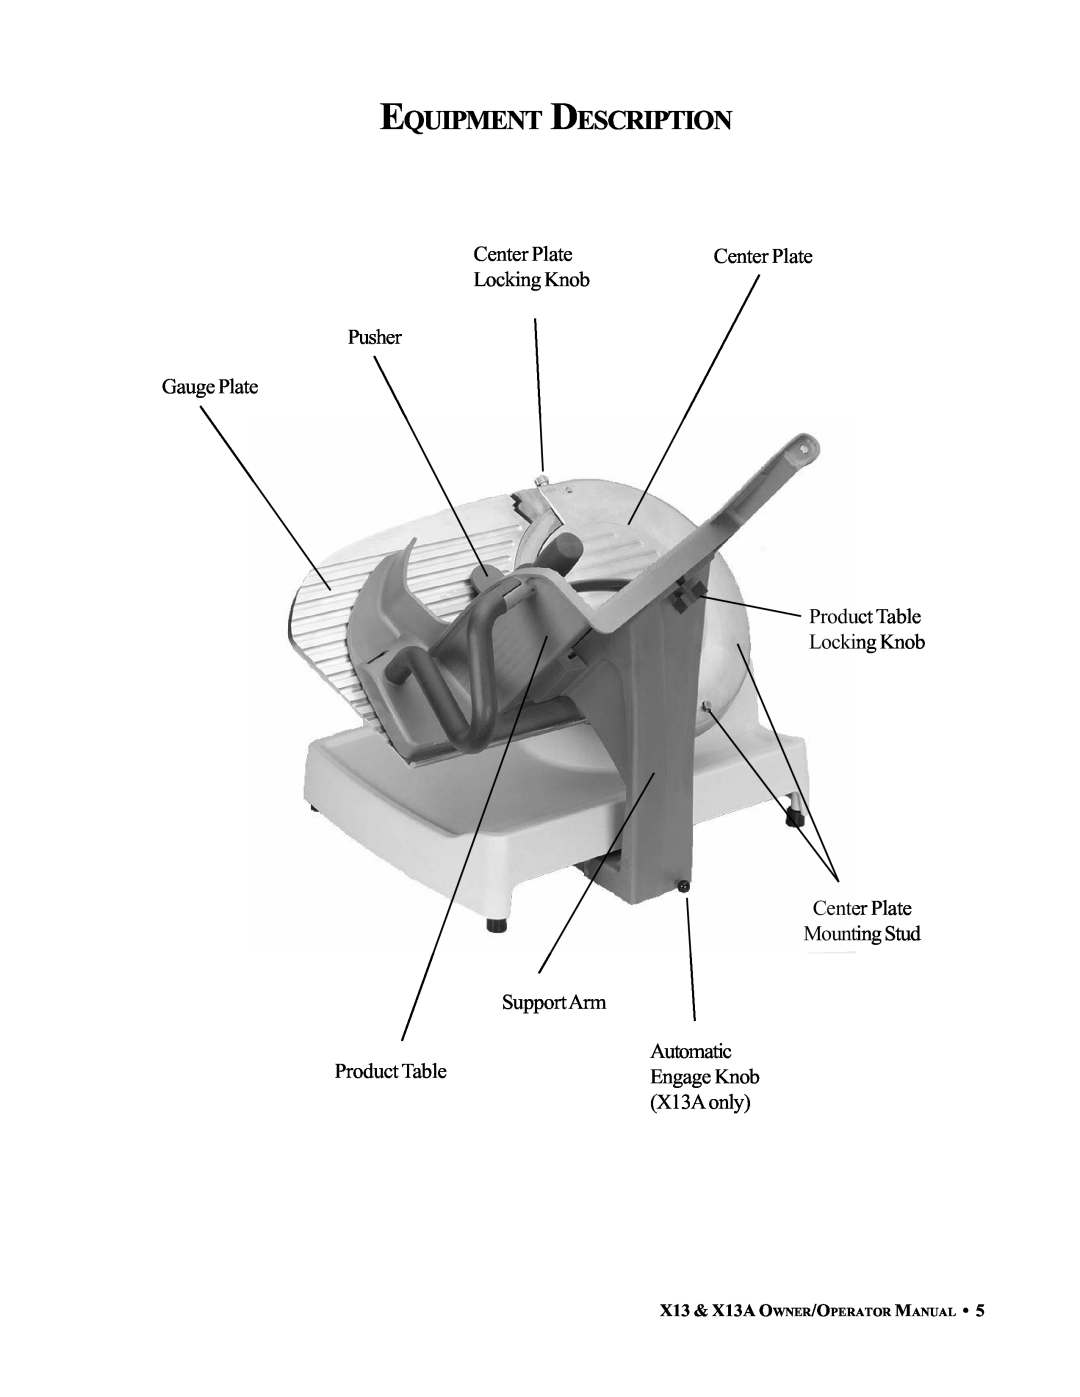 Berkel X13A Equipment Description, Center Plate Locking Knob Pusher Gauge Plate SupportArm Product Table 